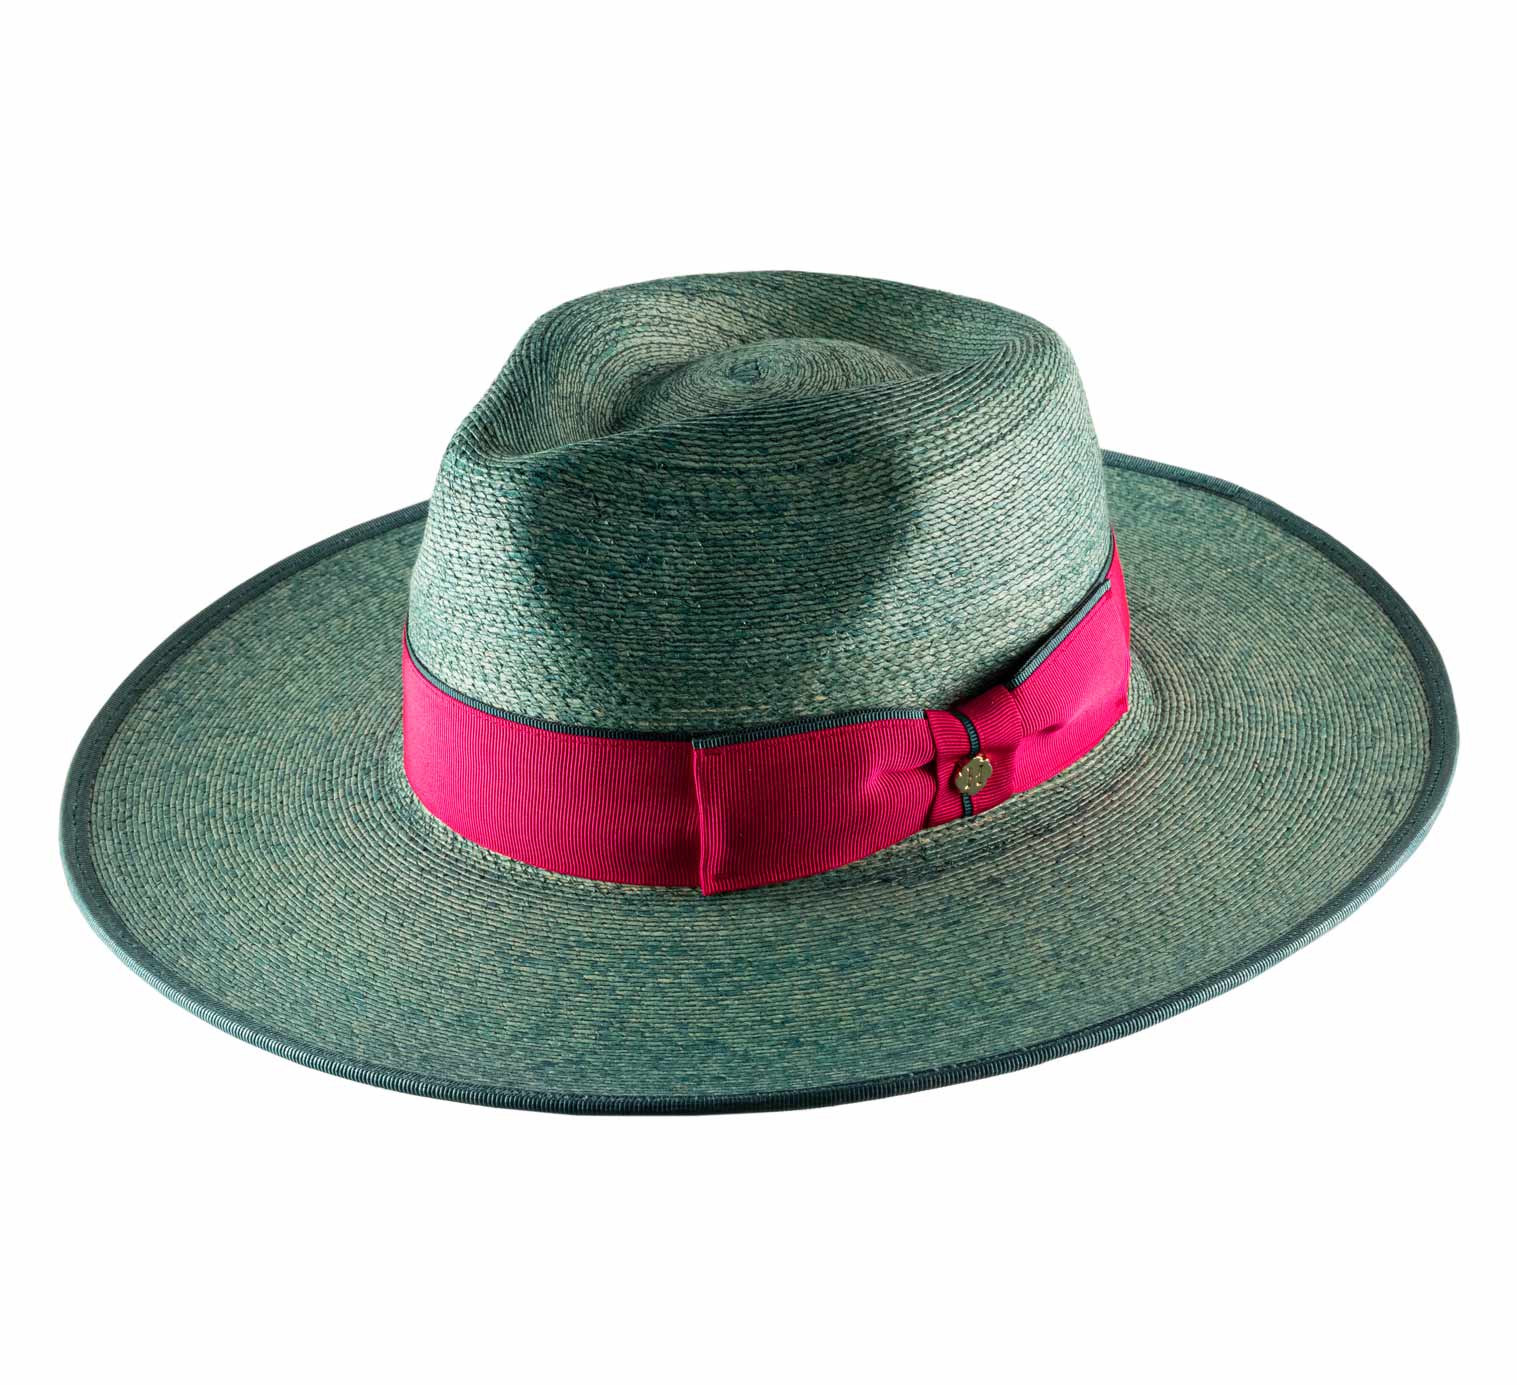 Gus Sahuayo Palm Straw Cowboy Hat by Stone Hats